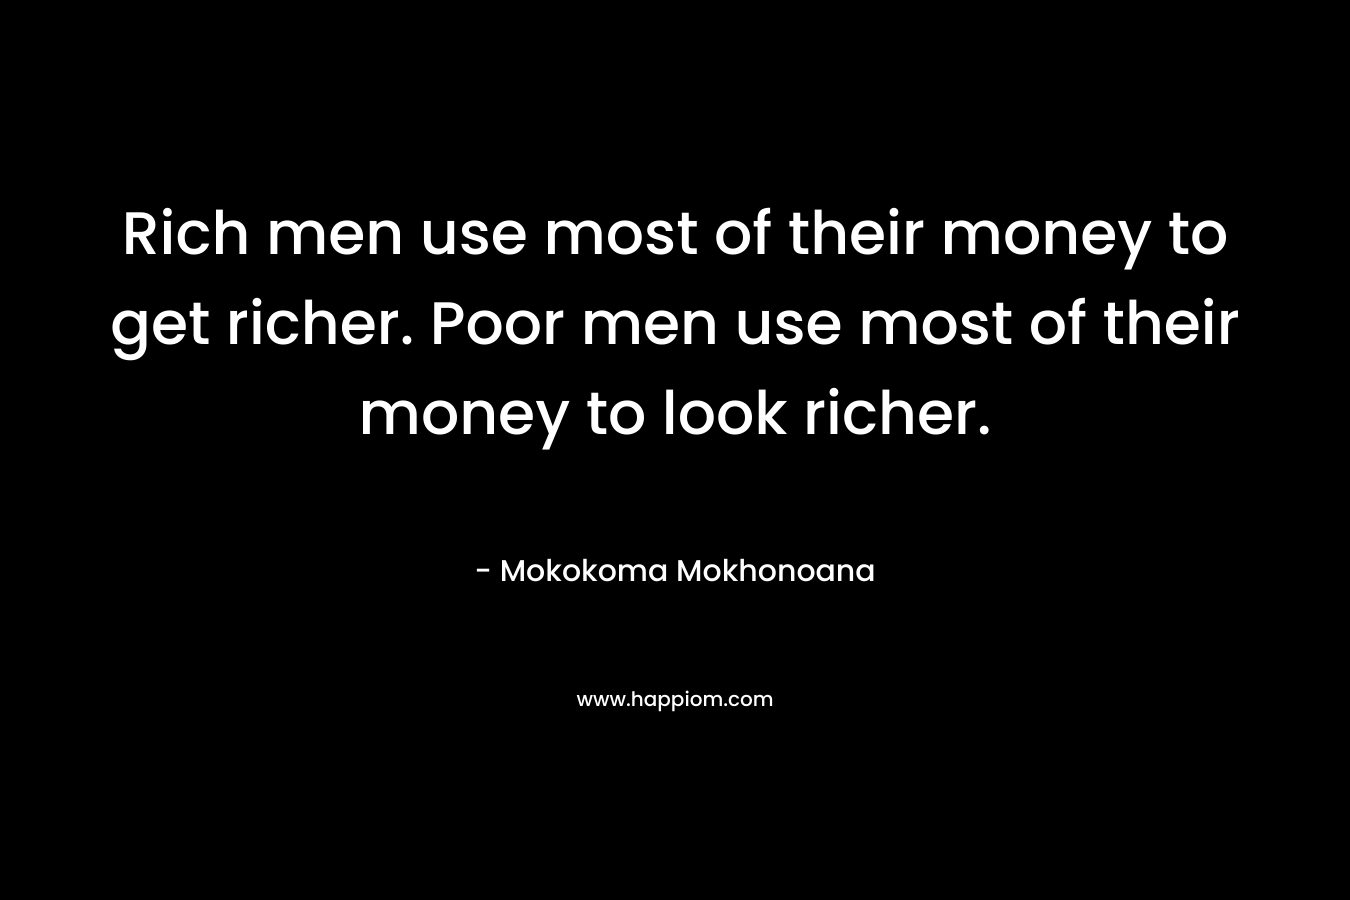 Rich men use most of their money to get richer. Poor men use most of their money to look richer.